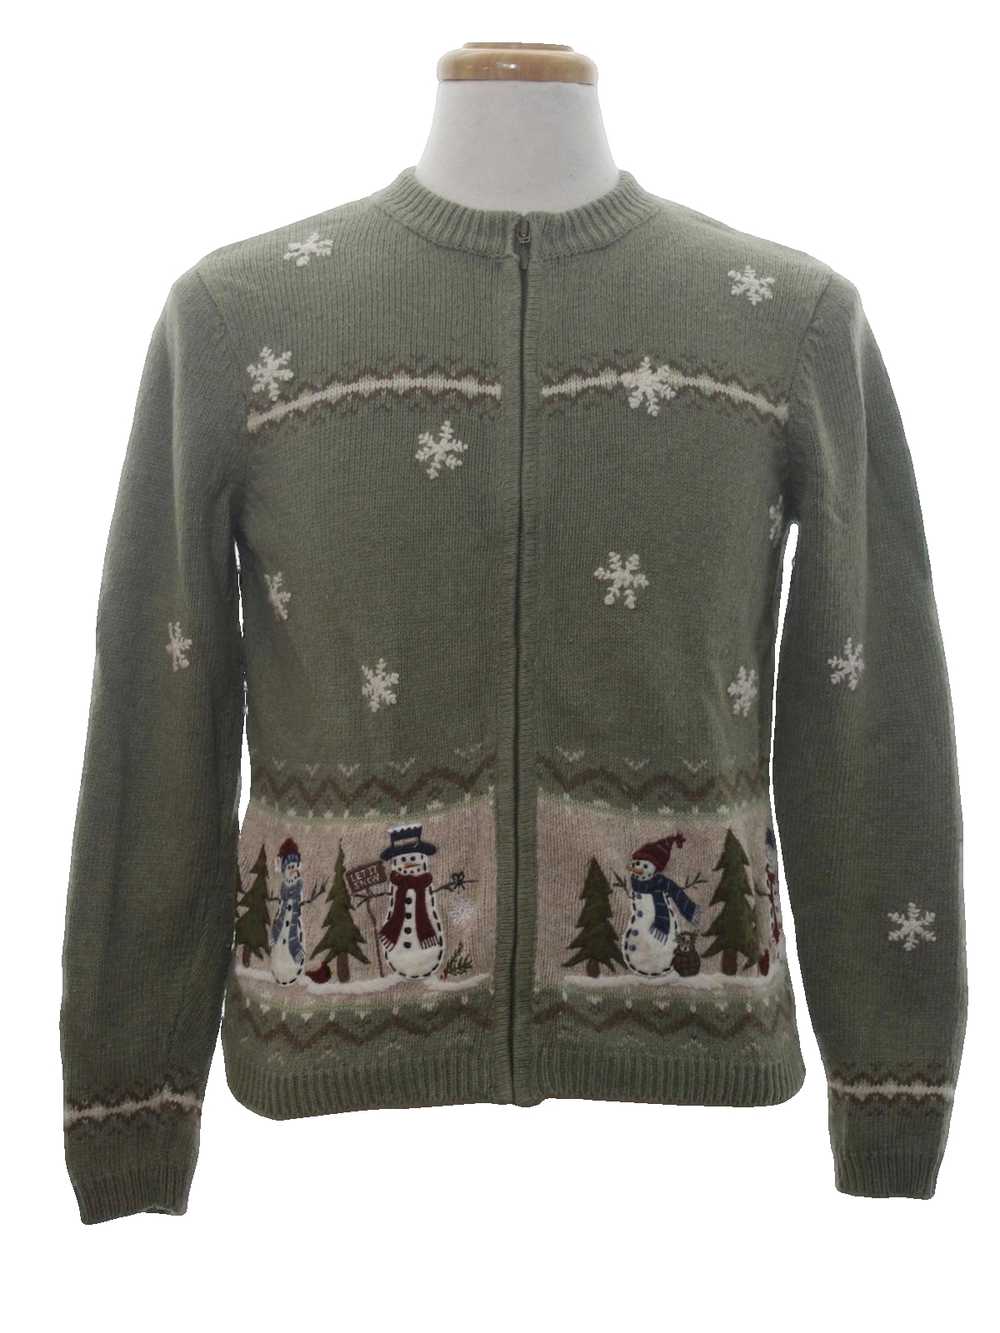 Croft and Barrow Unisex Ugly Christmas Sweater - image 1